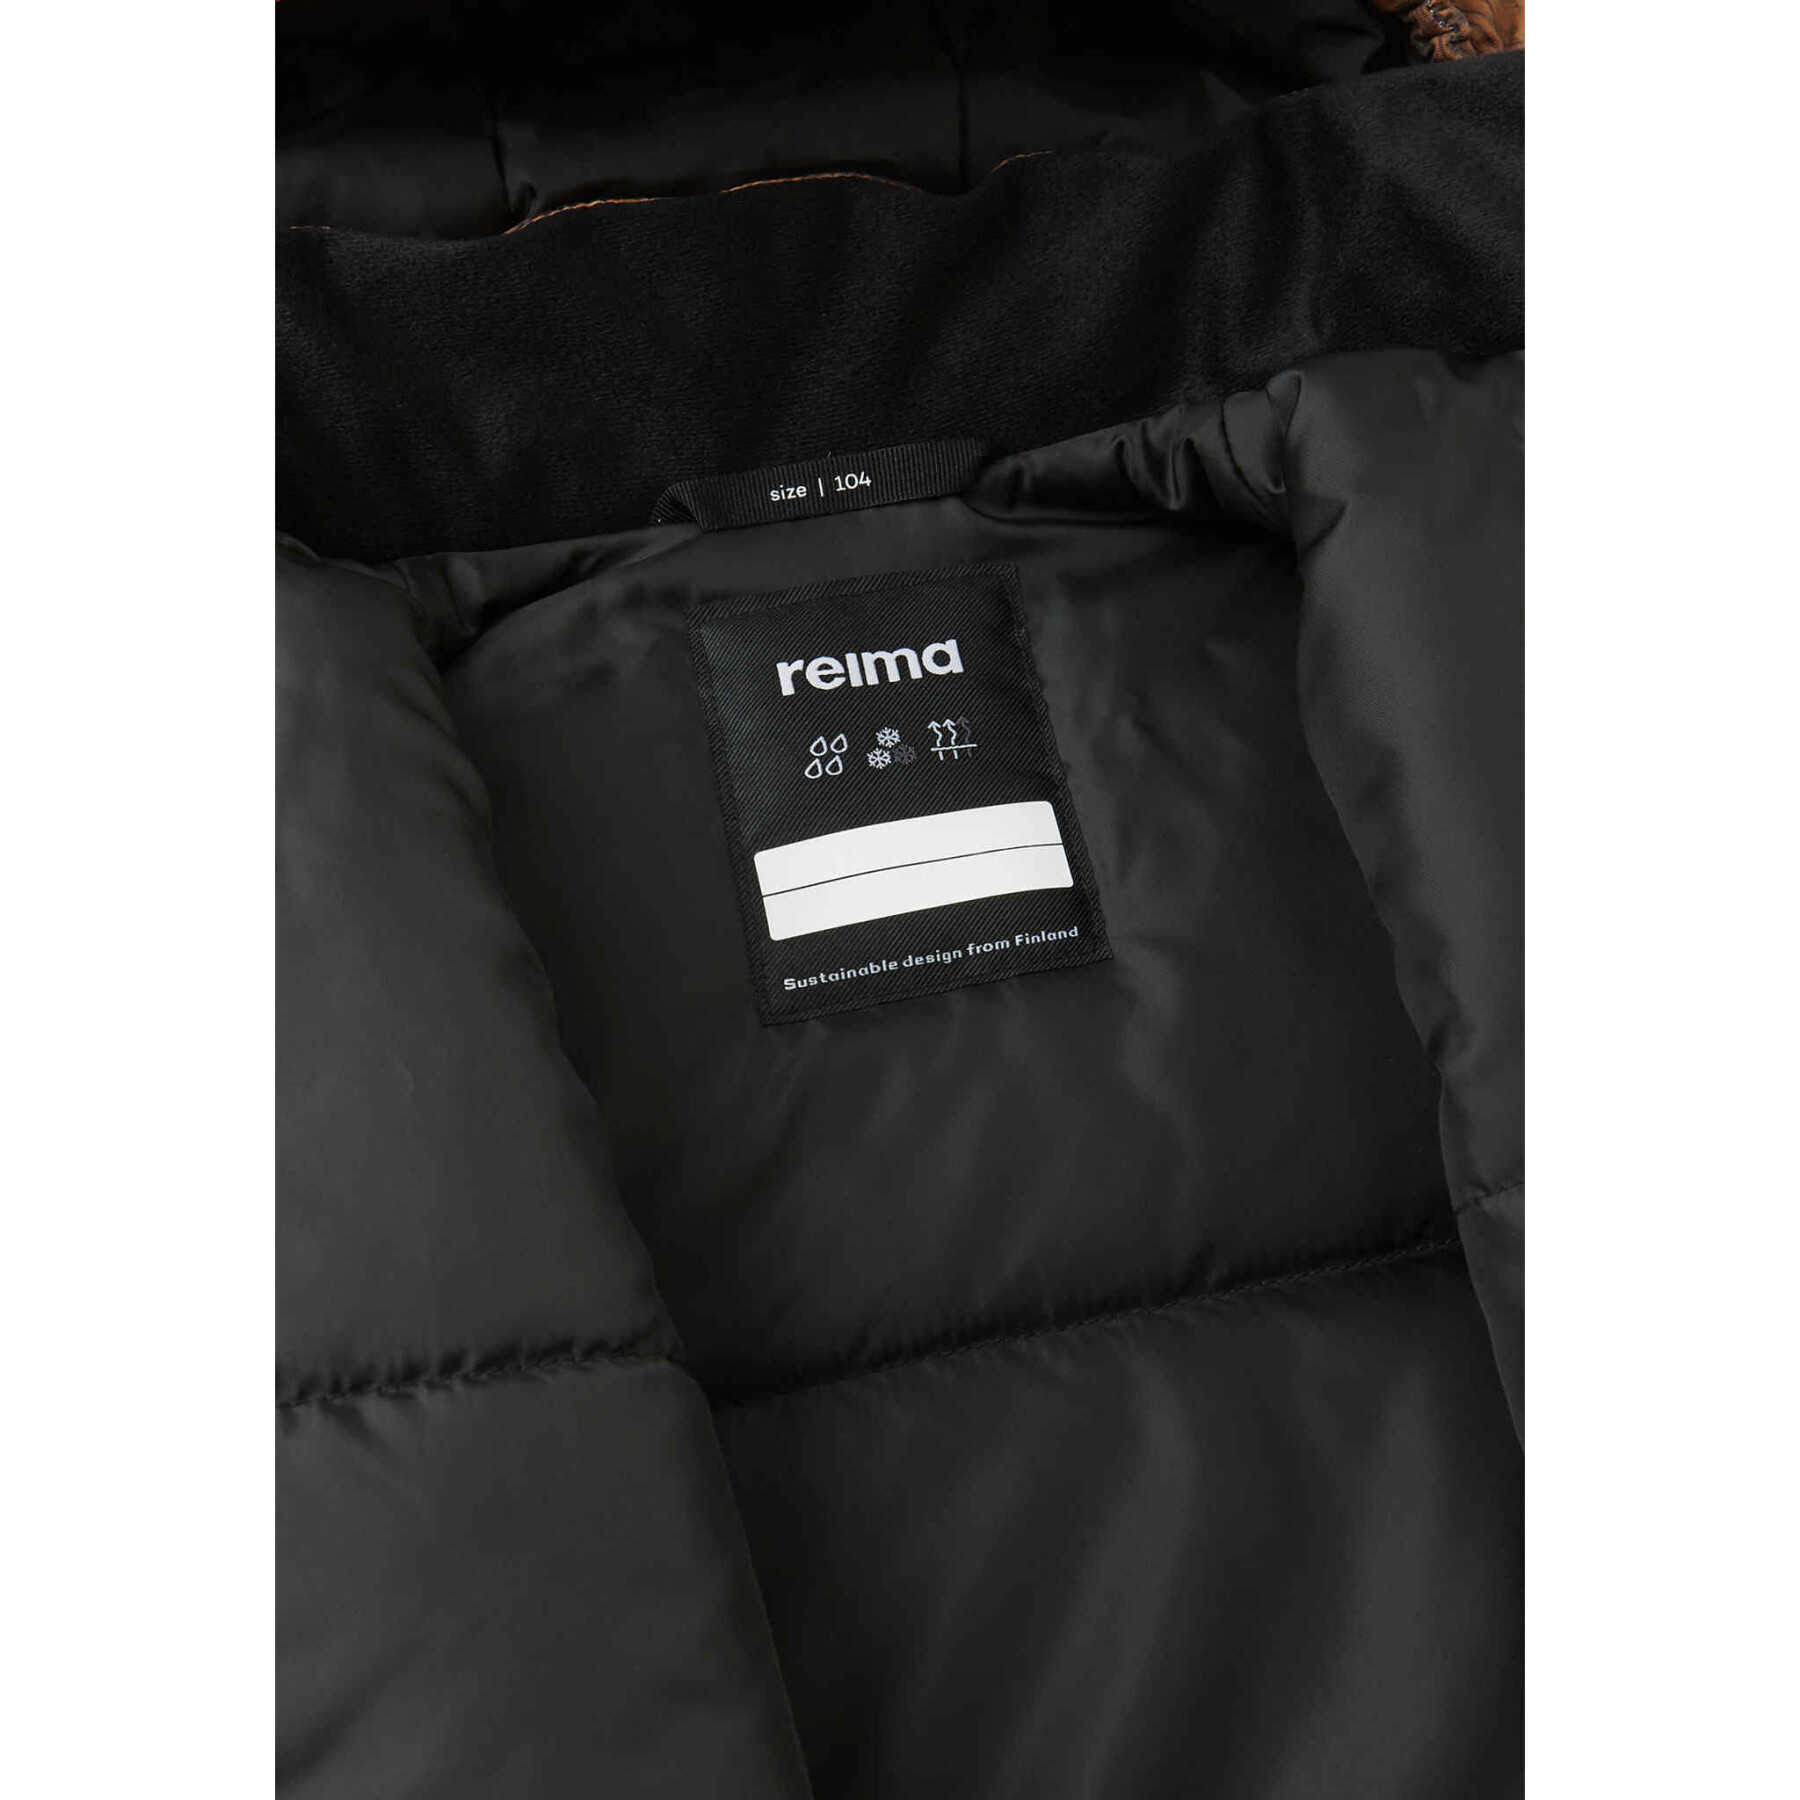 Baby winter jacket Reima Nuotio